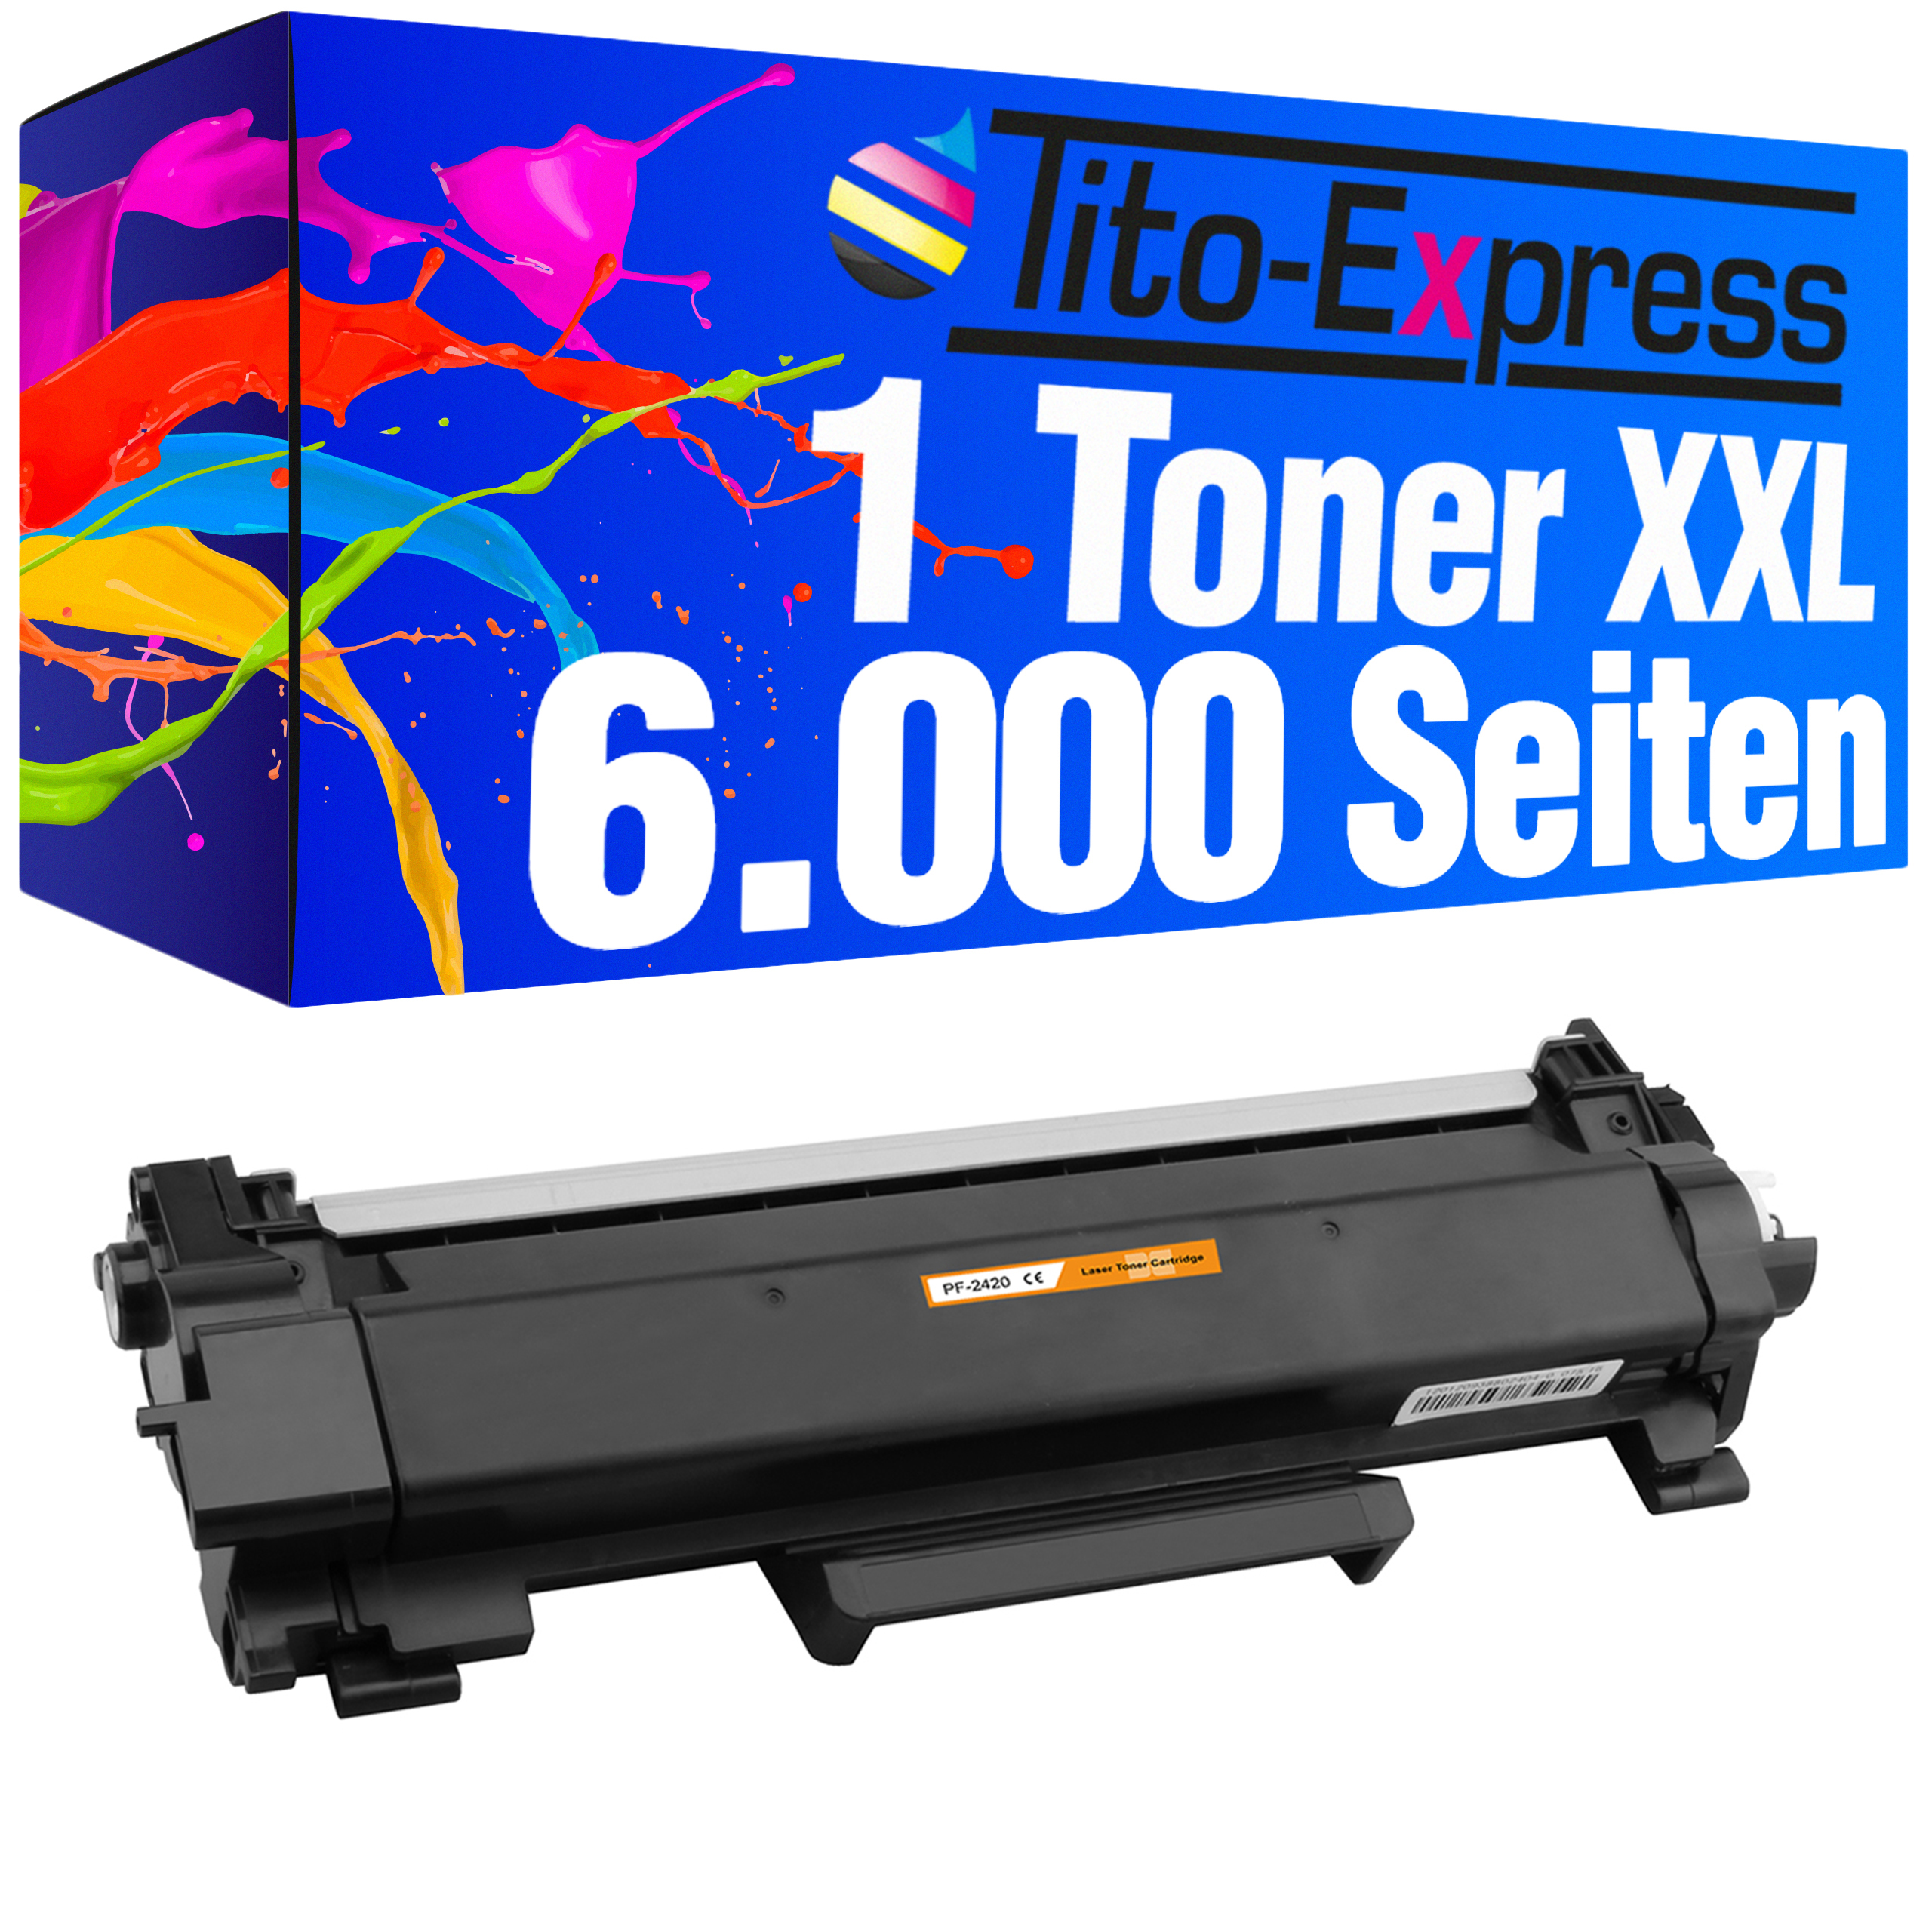 PLATINUMSERIE 1 Toner Toner (TN-2420) TN-2420 Brother ersetzt Super-XL Black TITO-EXPRESS